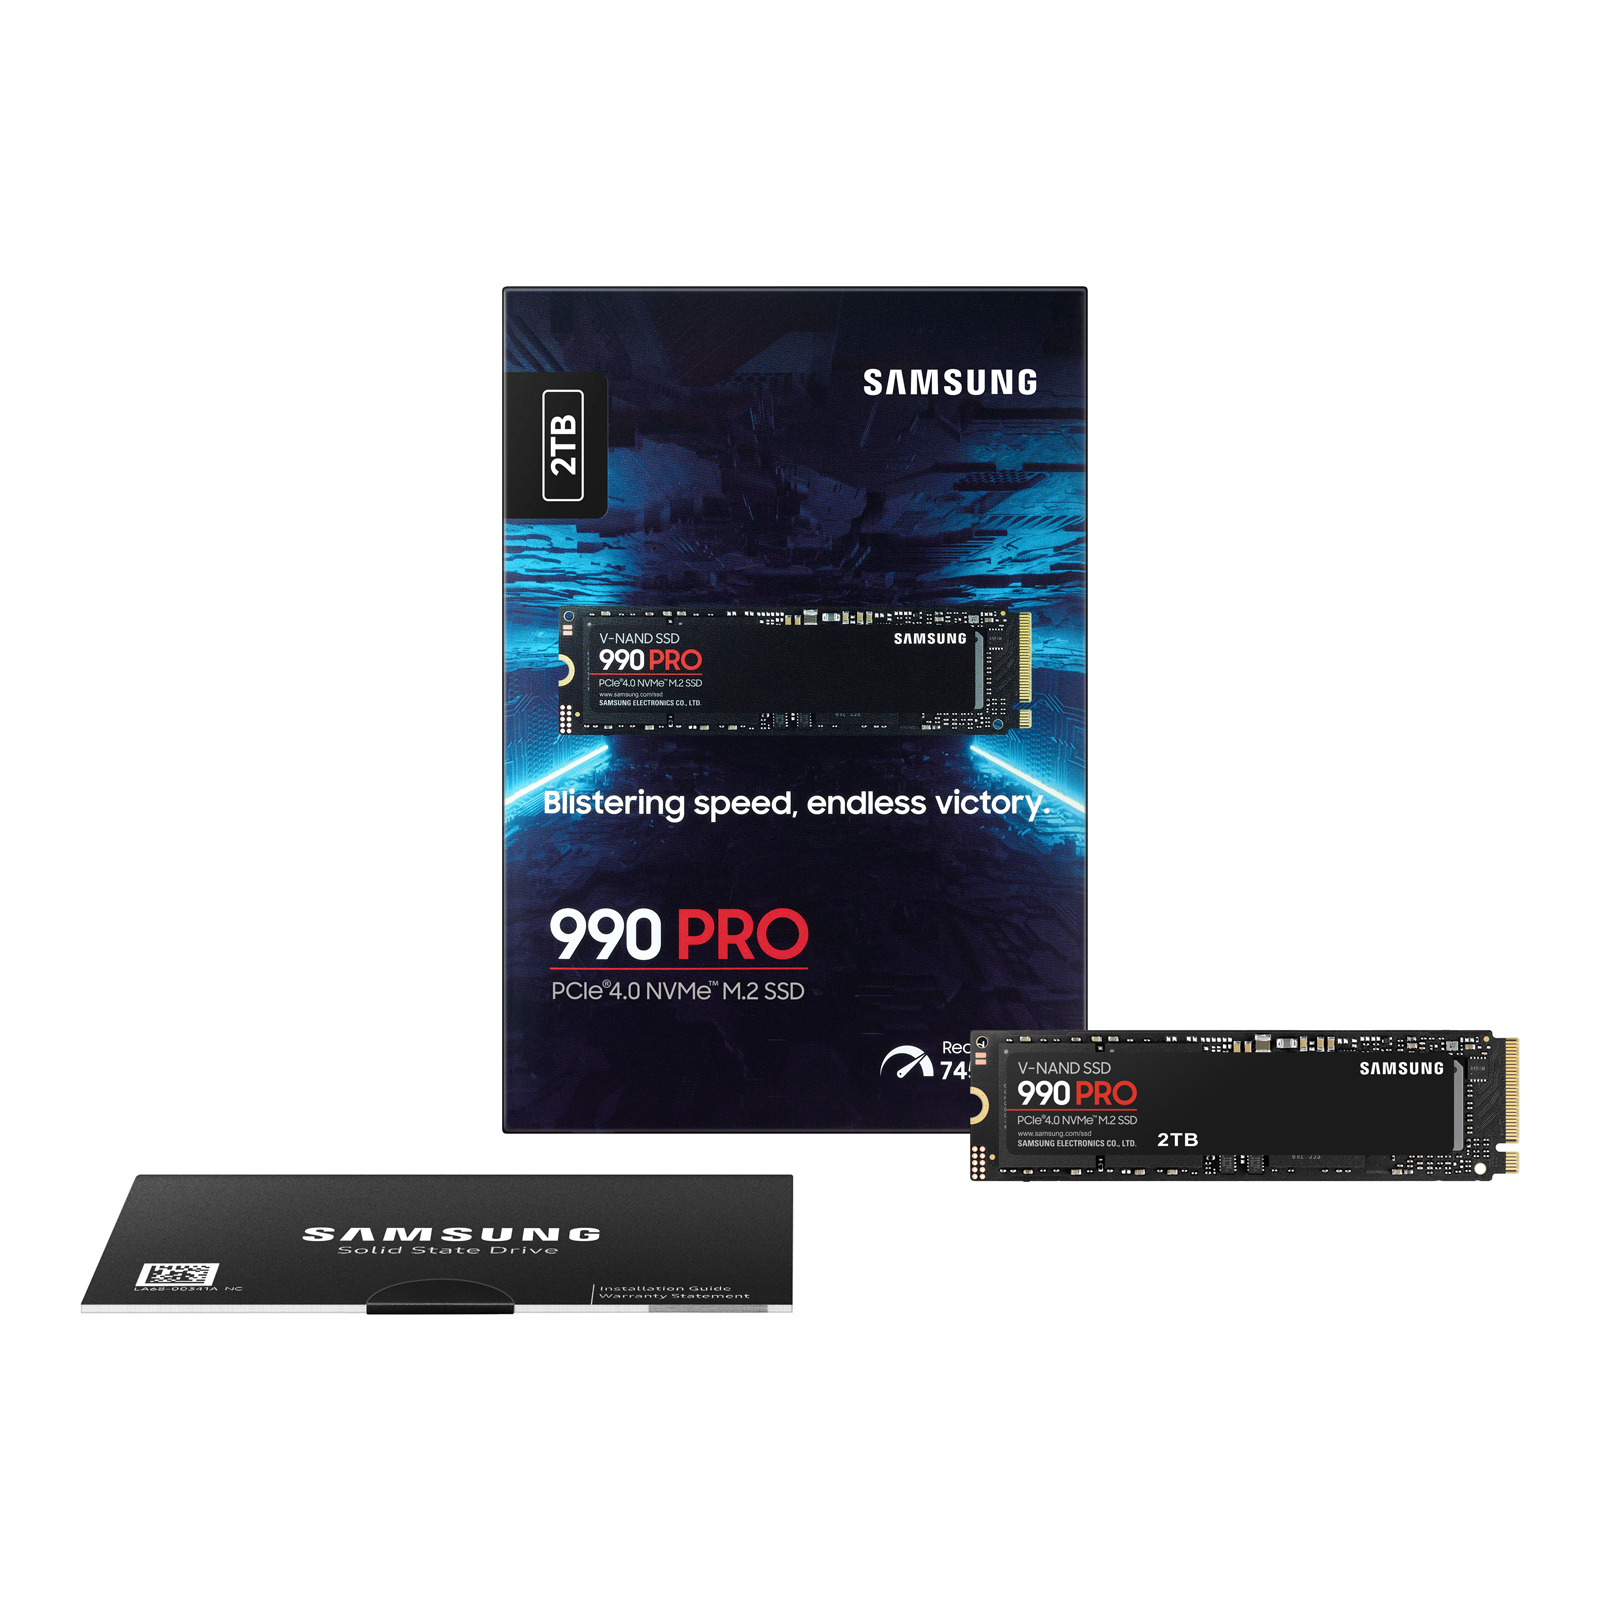 Samsung NVMe M.2 SSD 990 PRO (2TB) | ITGマーケティング - Samsung ...